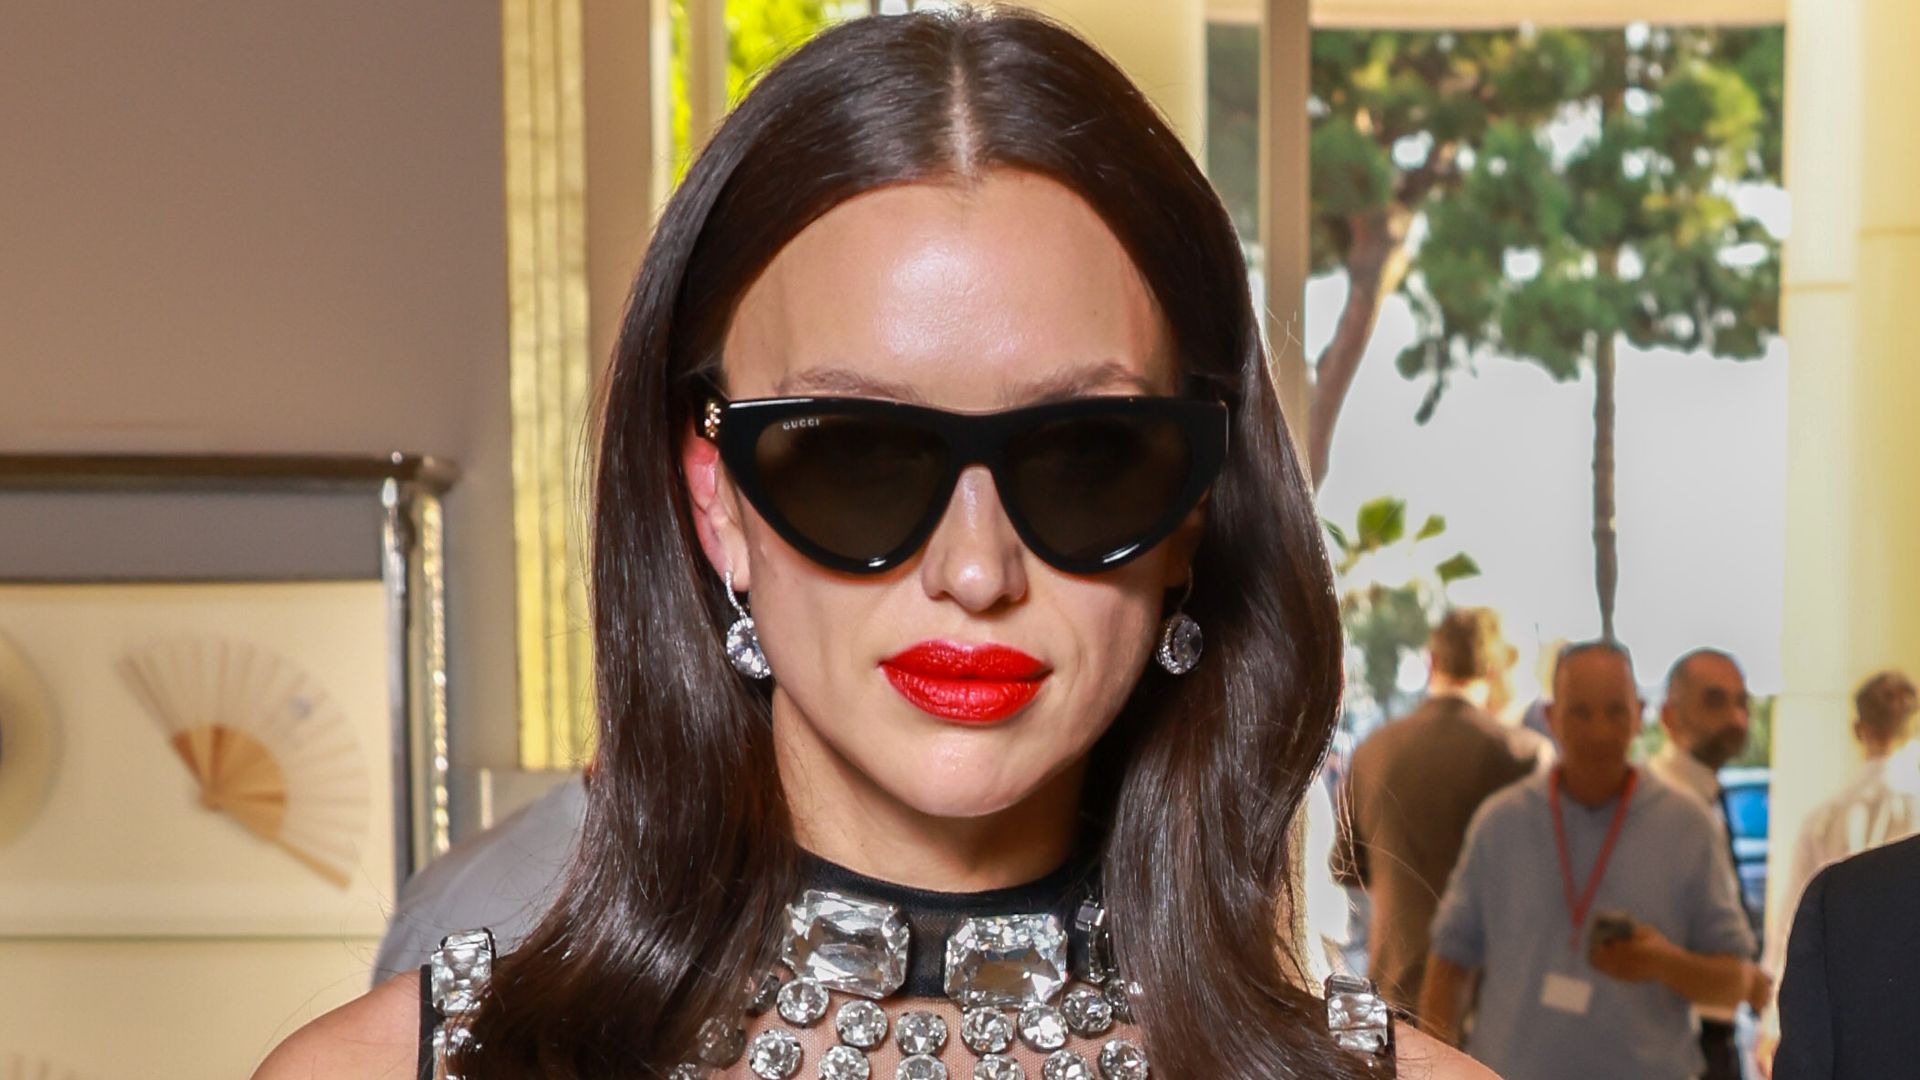 irina shayk wearing lingerie sunglasses hotel lobby cannes